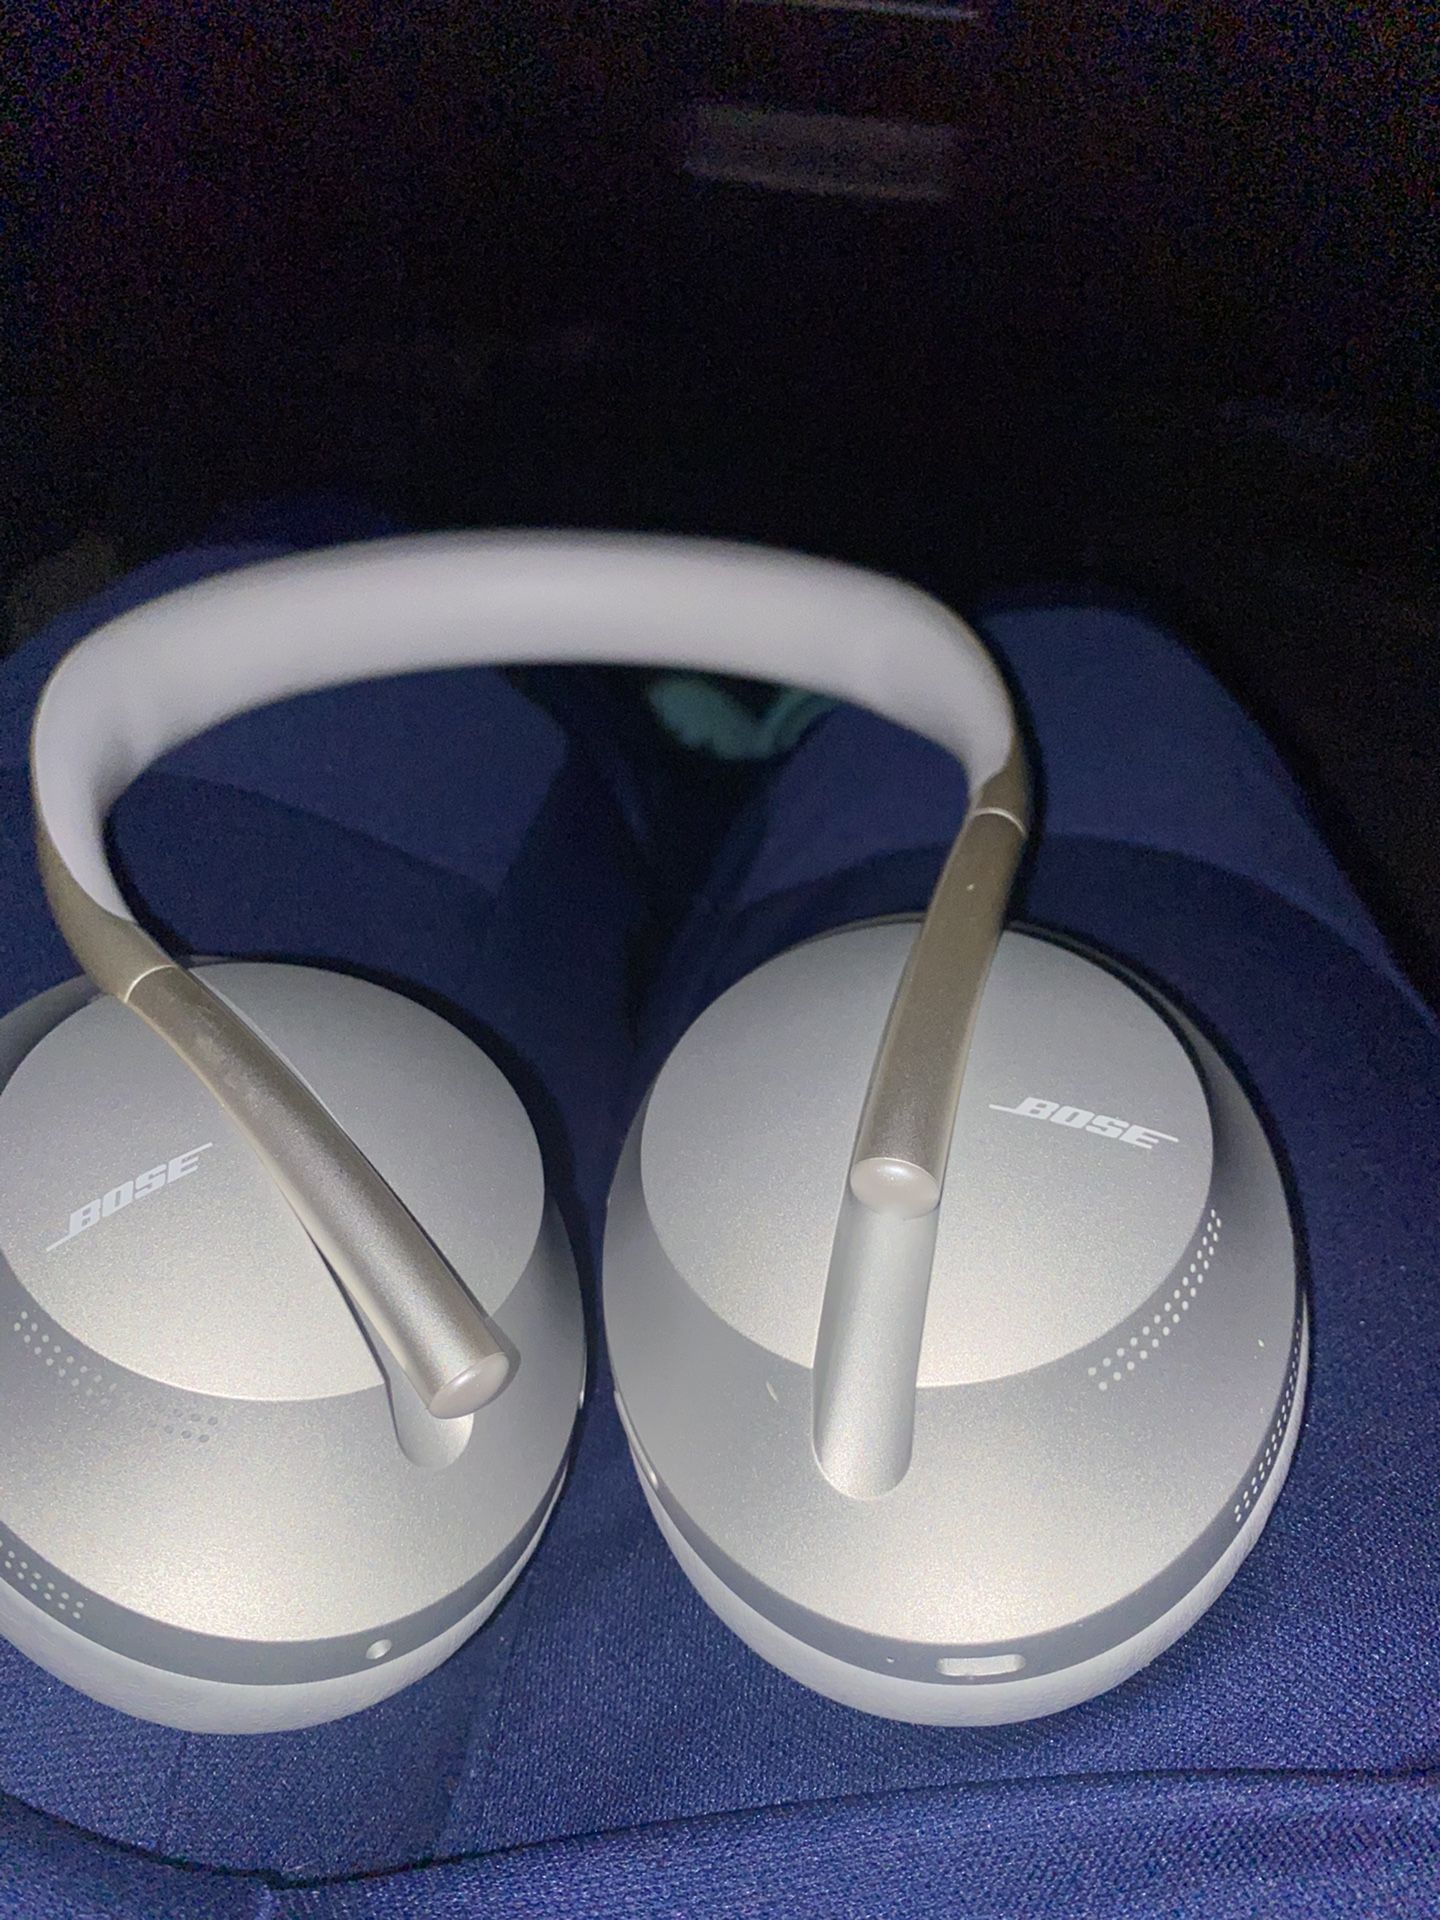 Noice canceling headphones Bose